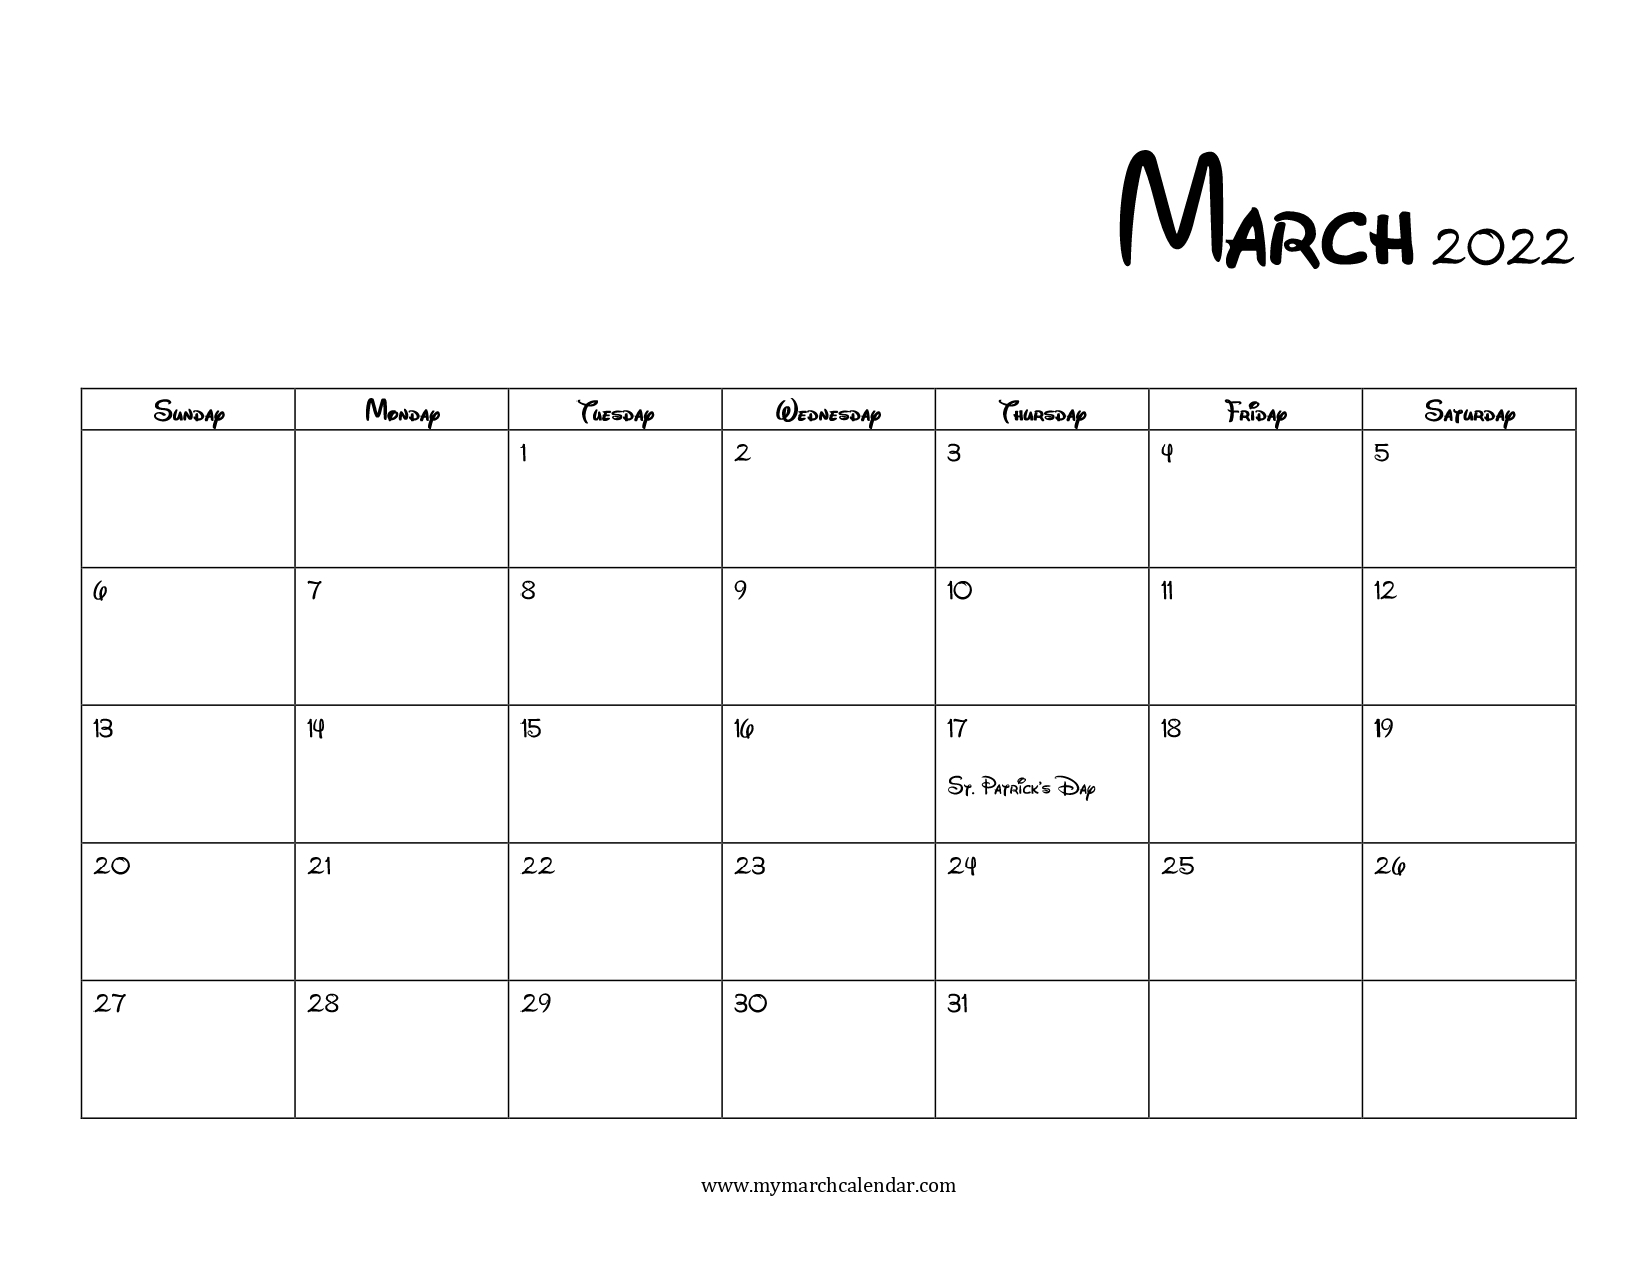 30+ March 2022 Calendar, March 2022 Blank Calendar